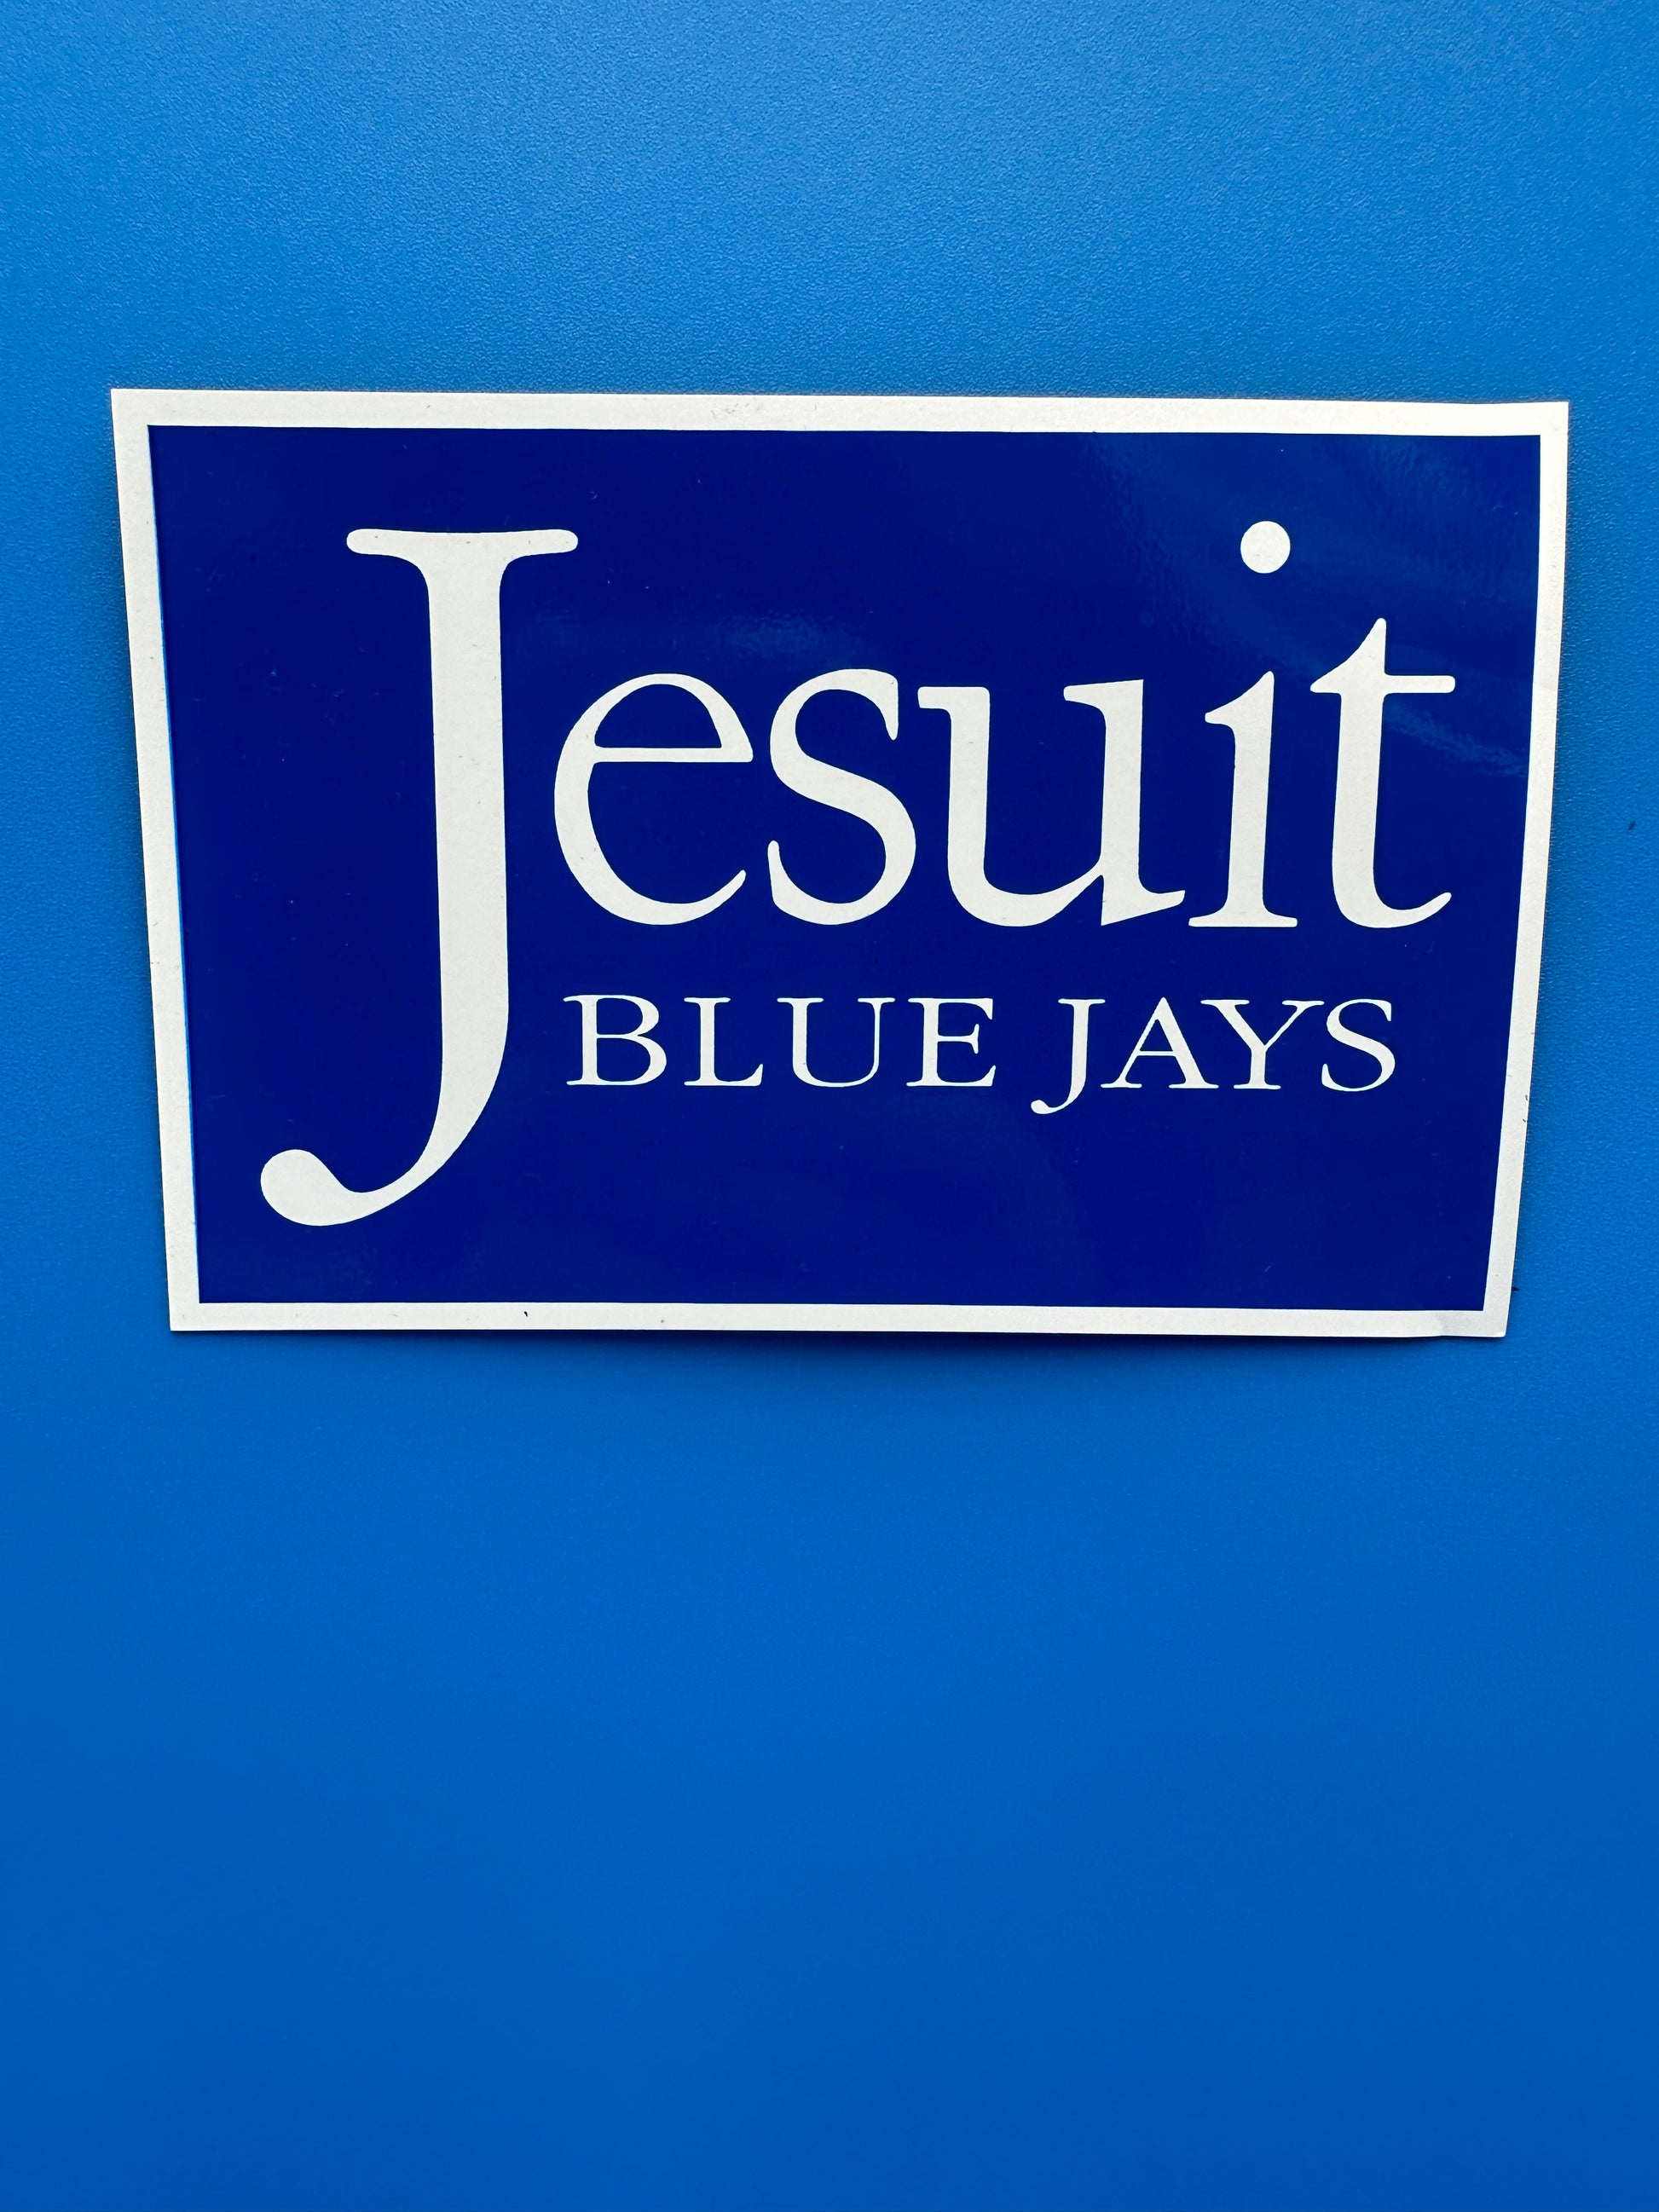 4 x 5 blue magnet with Jesuit Blue Jays logo.  Show your Jesuit Spirit on your car or your refrigerator!